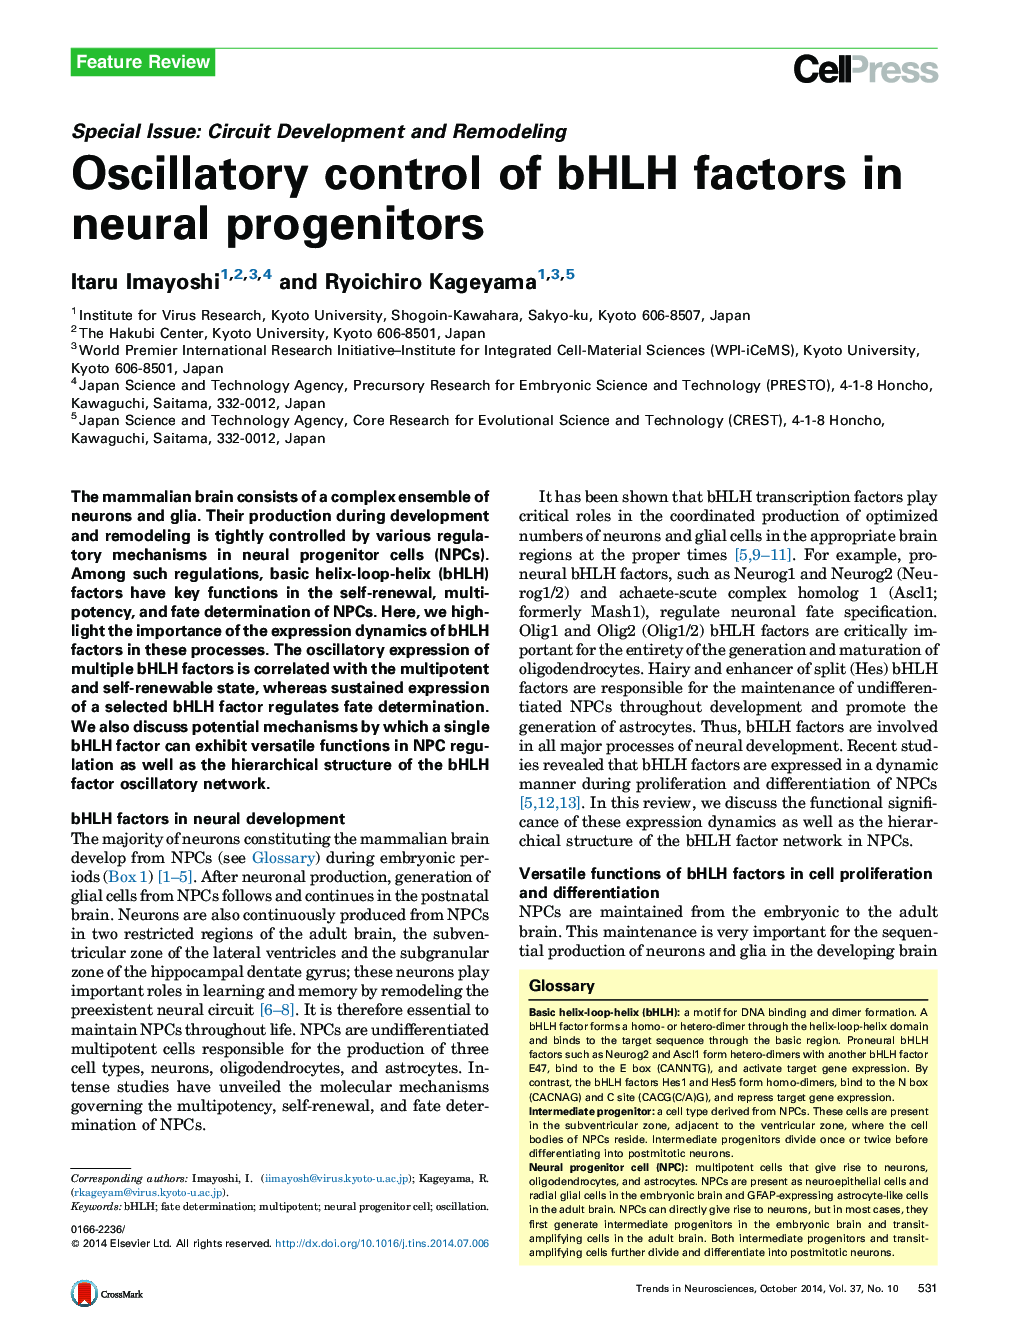 Oscillatory control of bHLH factors in neural progenitors